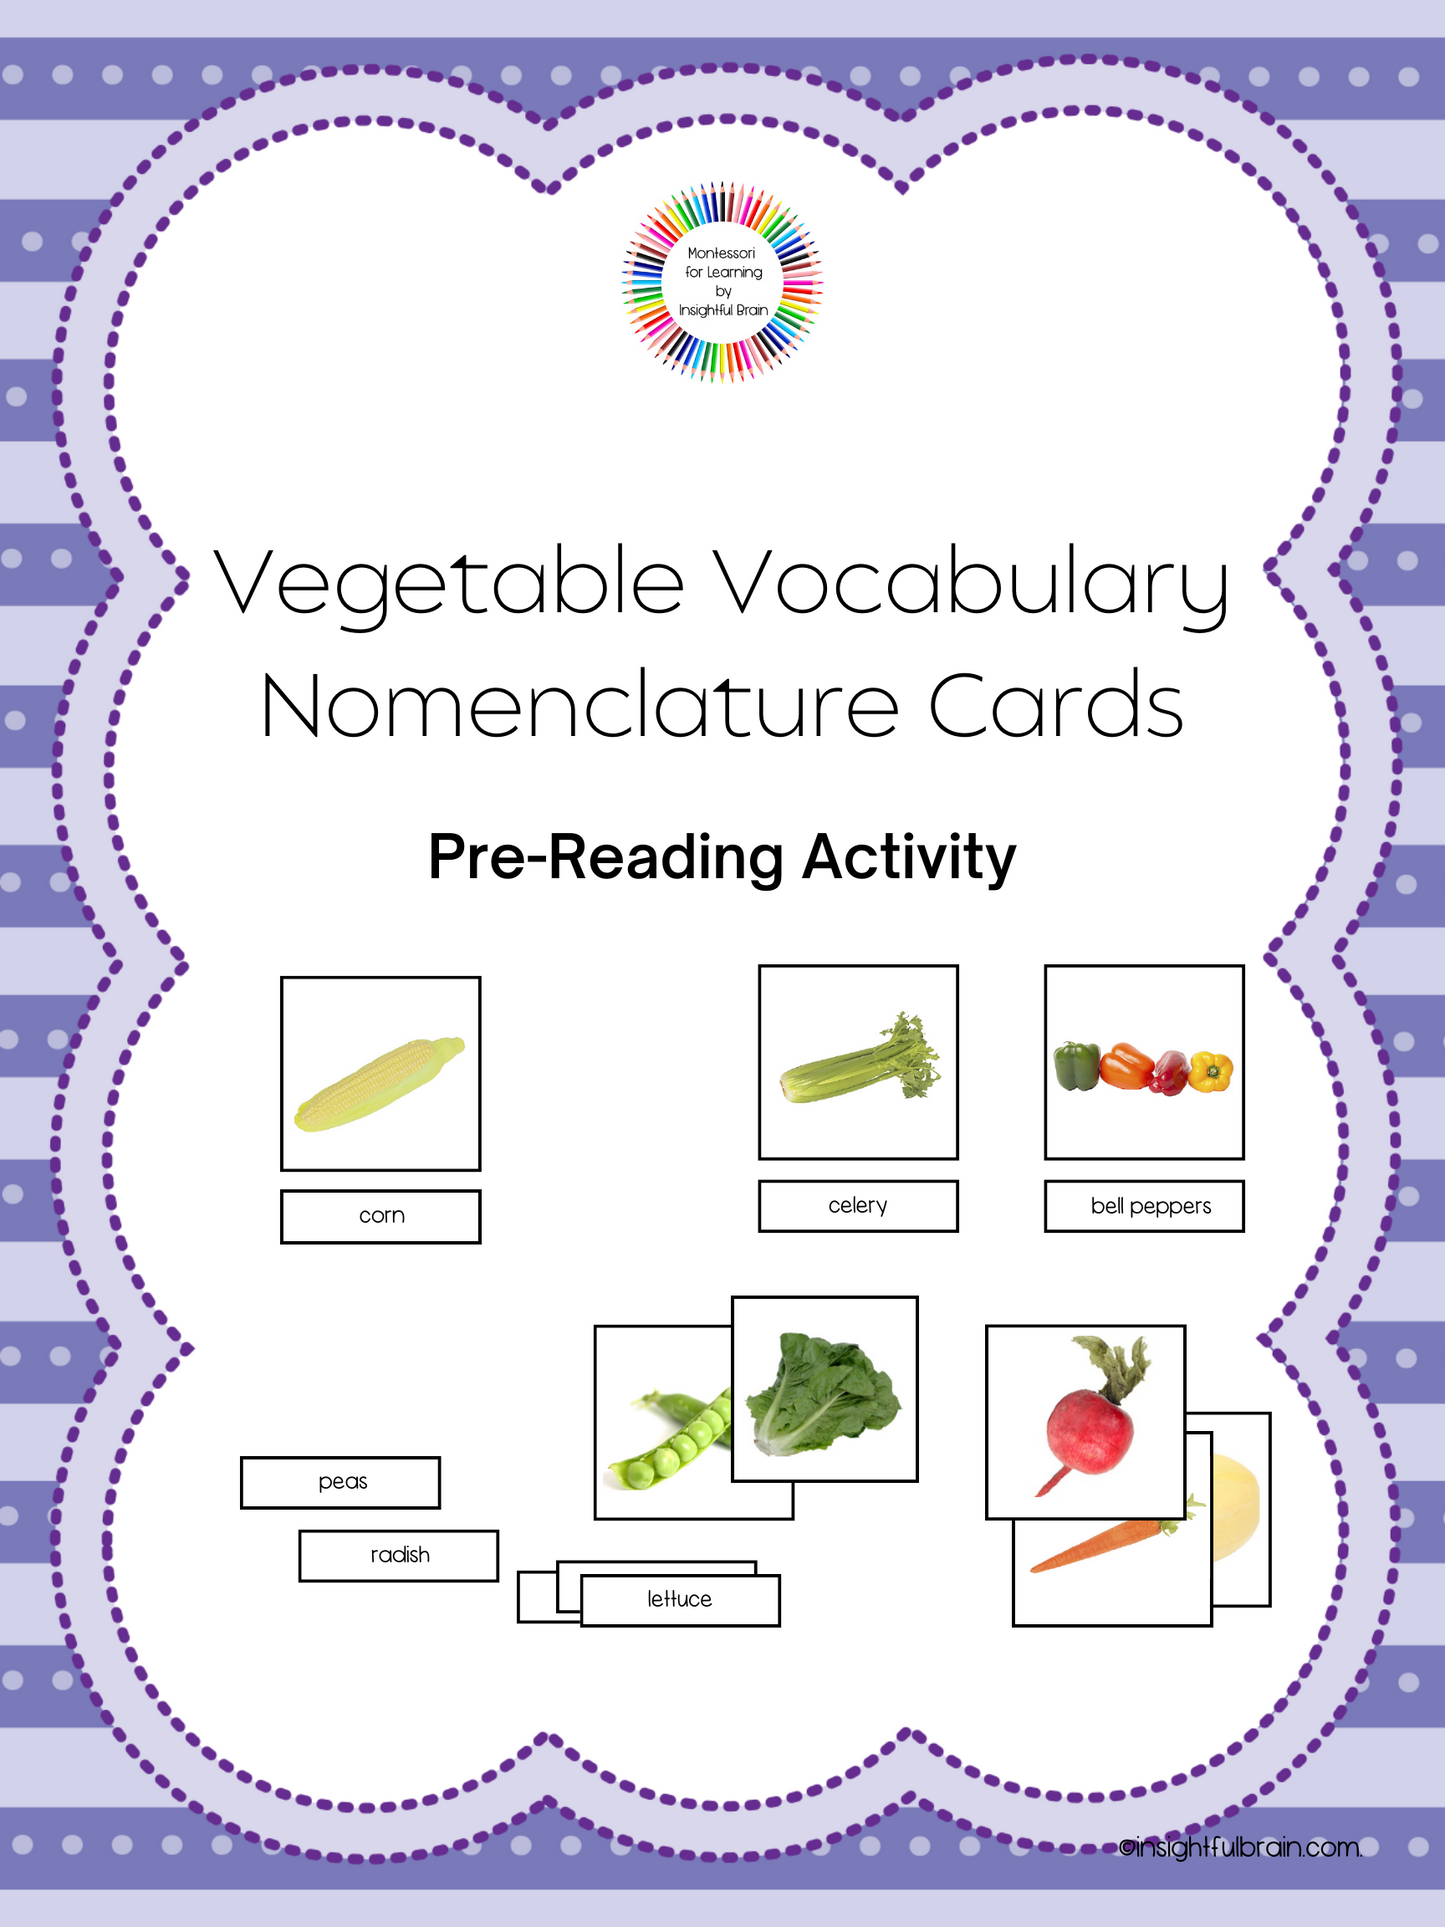 Vegetable Vocabulary Nomenclature Cards